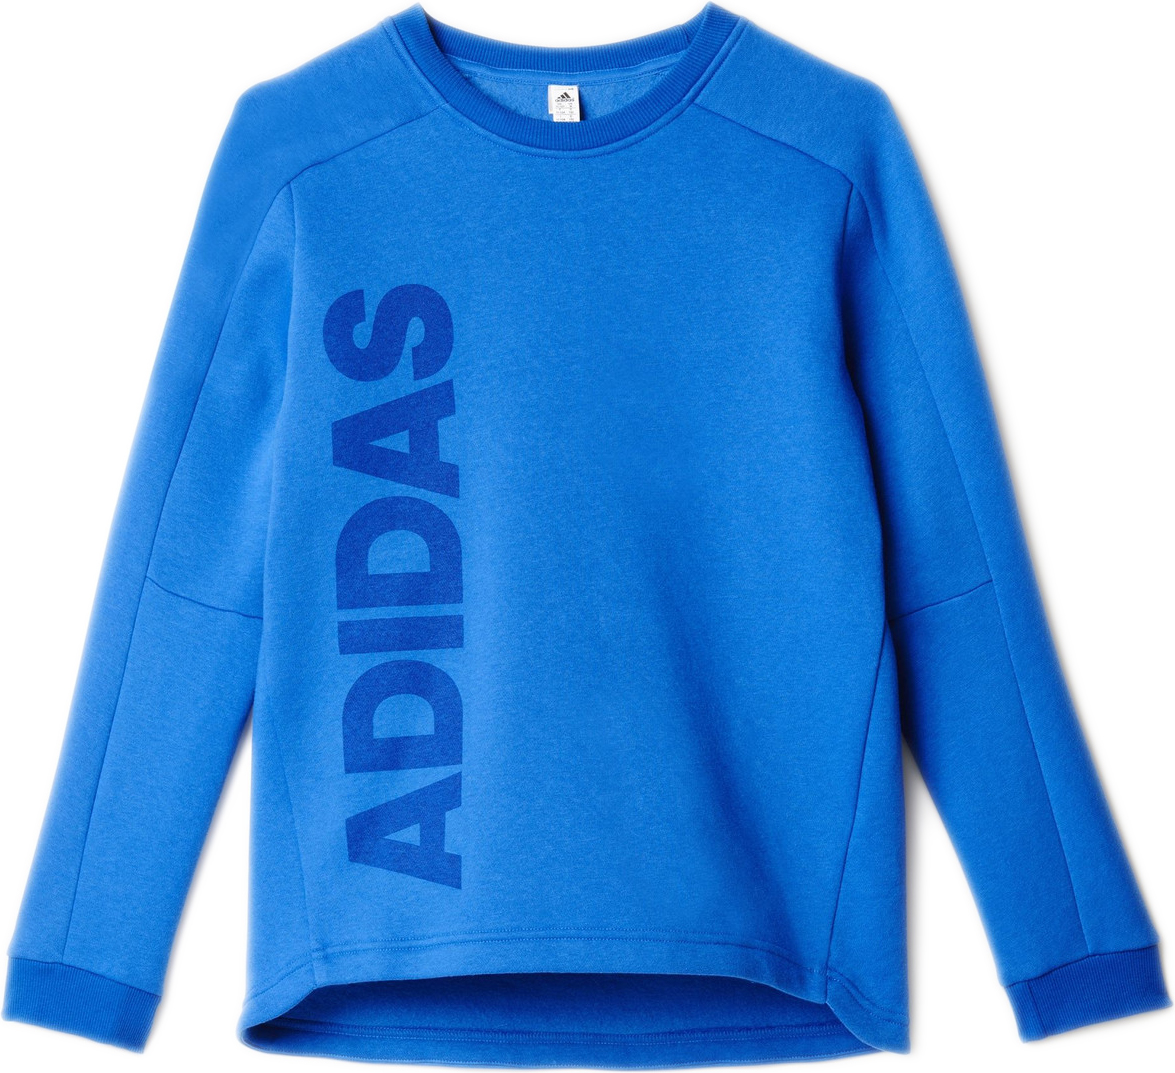 Свитшот для мальчика Adidas Yb Aa Crew, цвет: синий. AX6426. Размер 164